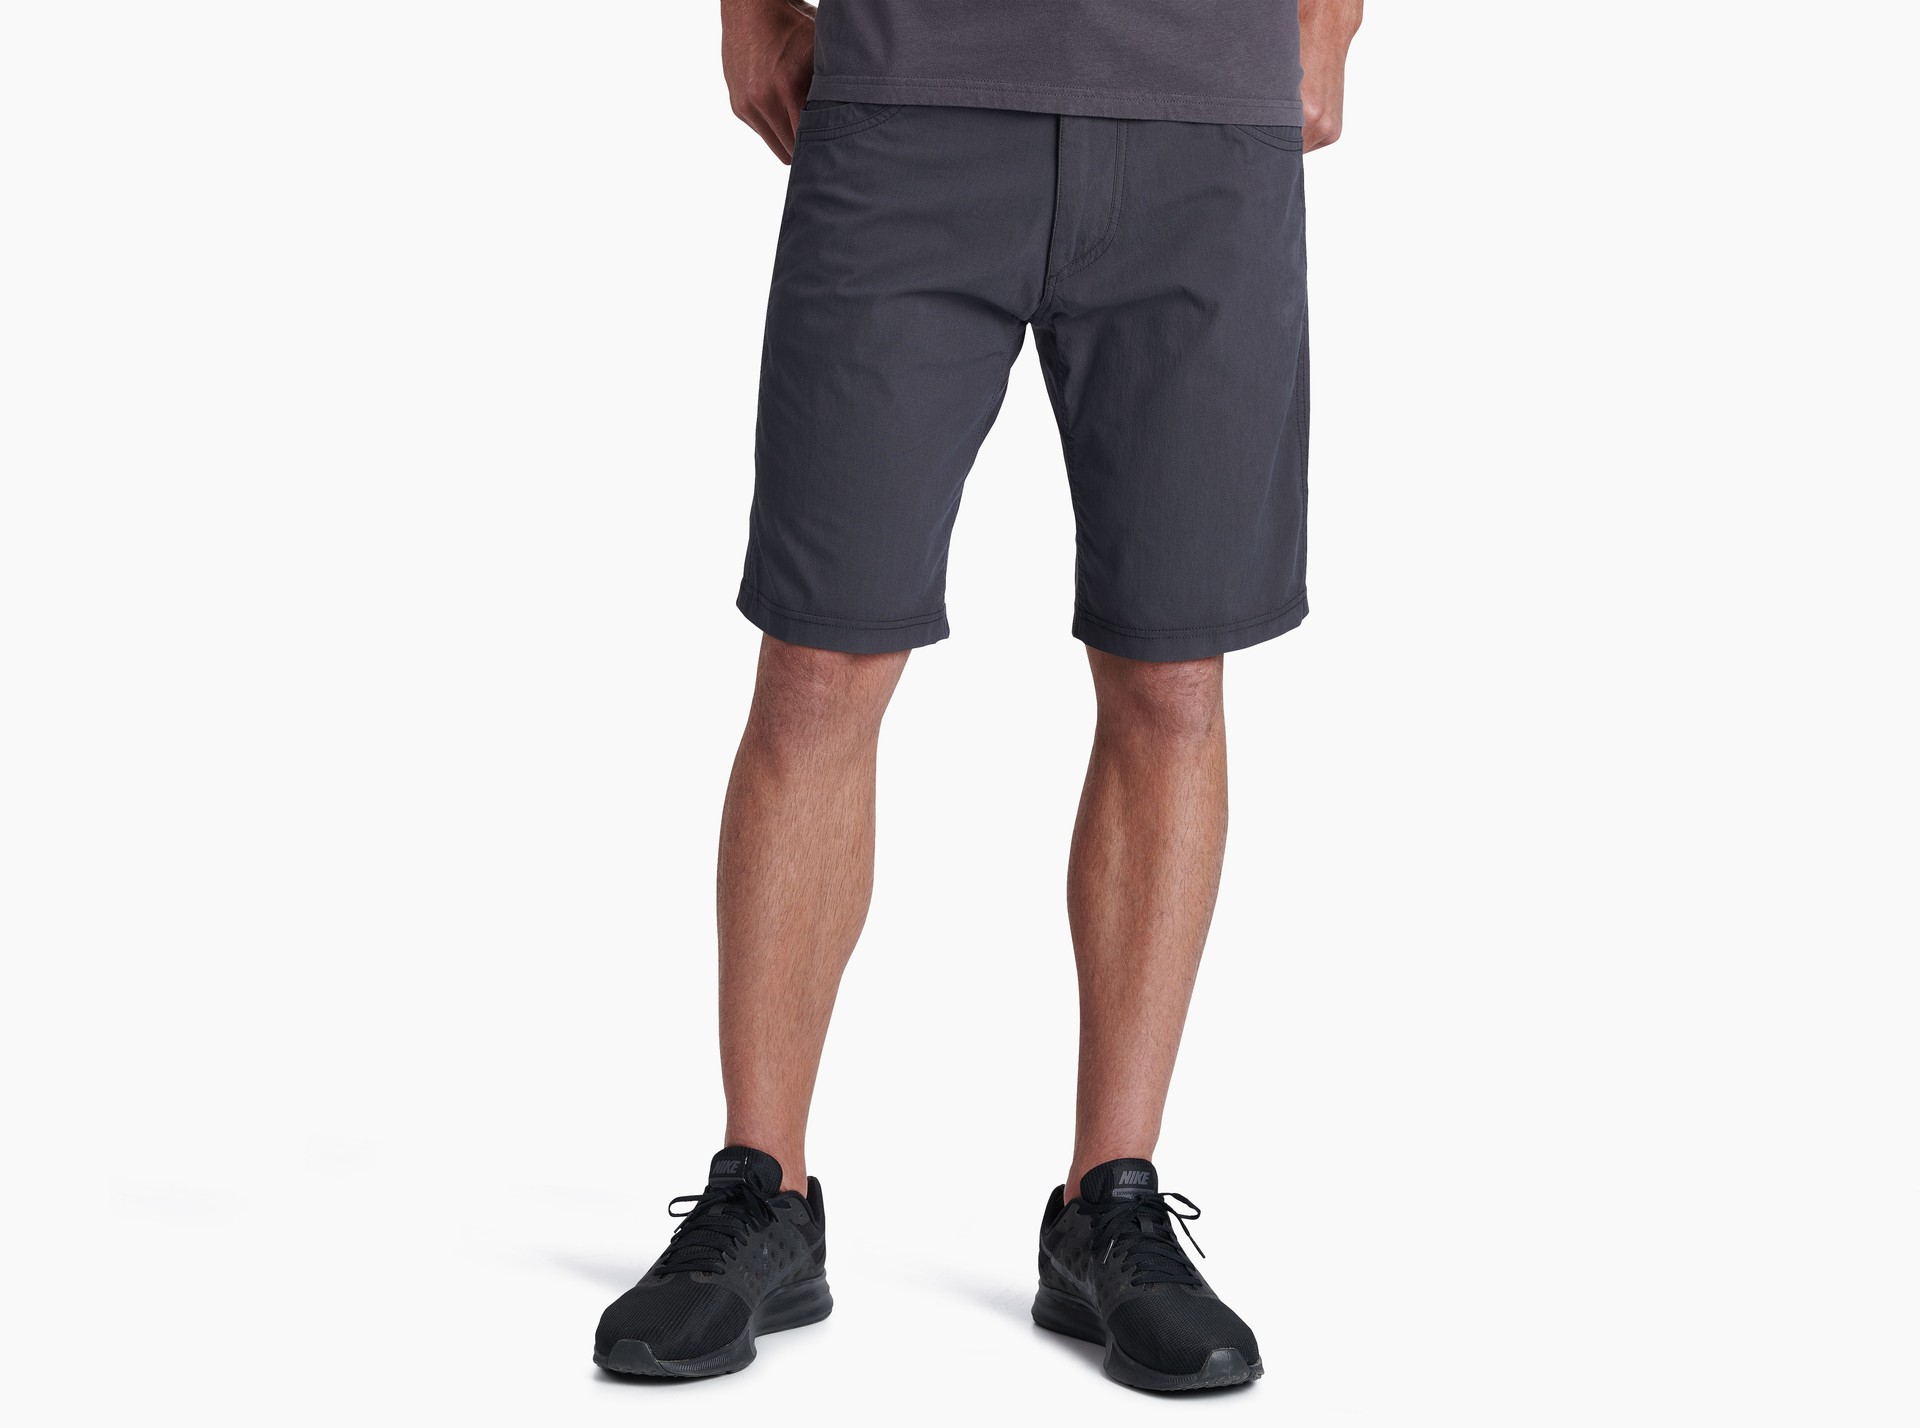 Shop Radikl® Short | Men's Shorts| KÜHL Clothing